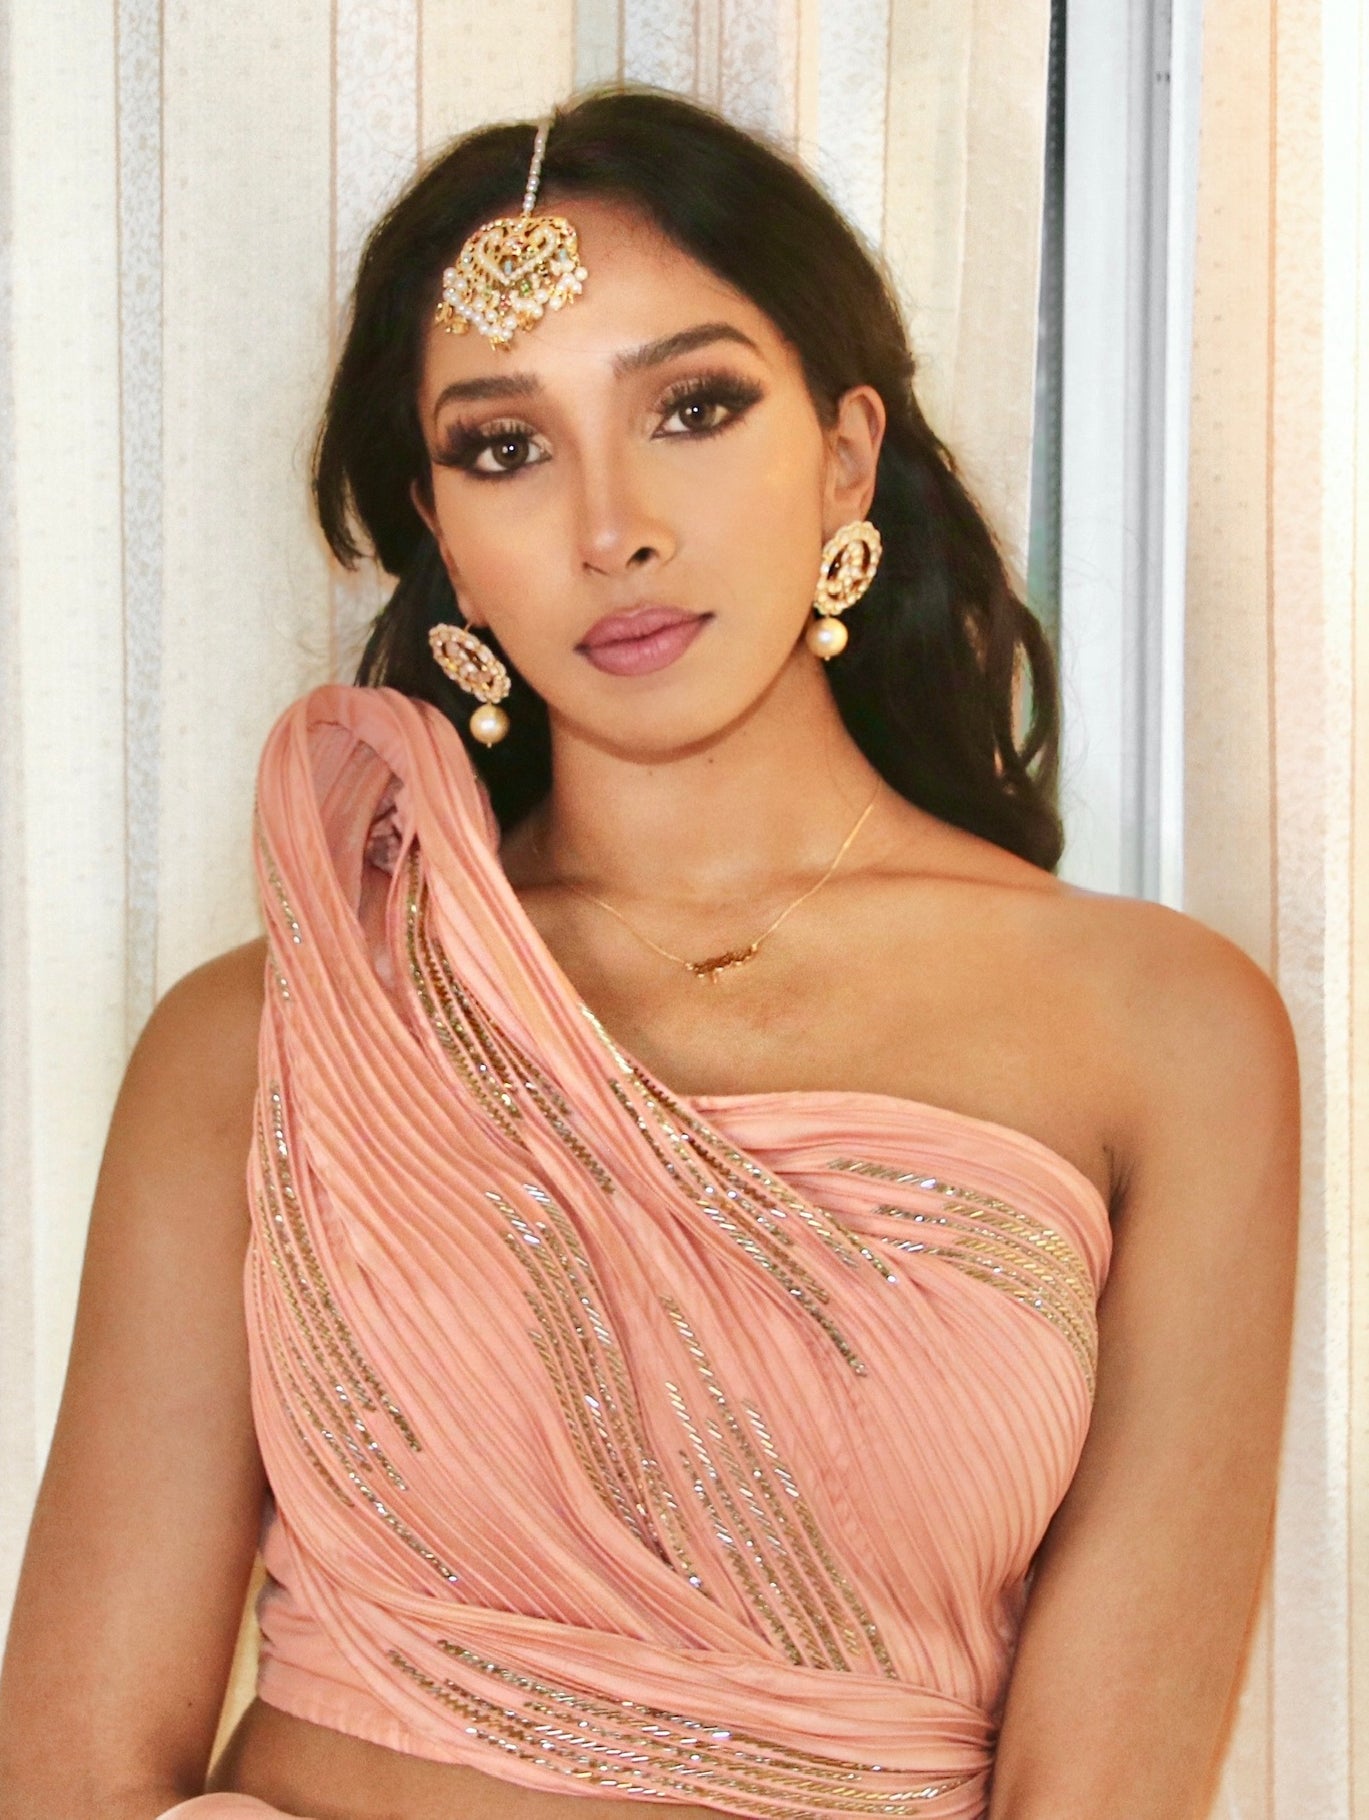 Indian Bridal Wear - Modern Reception Bridal Lehenga – B Anu Designs